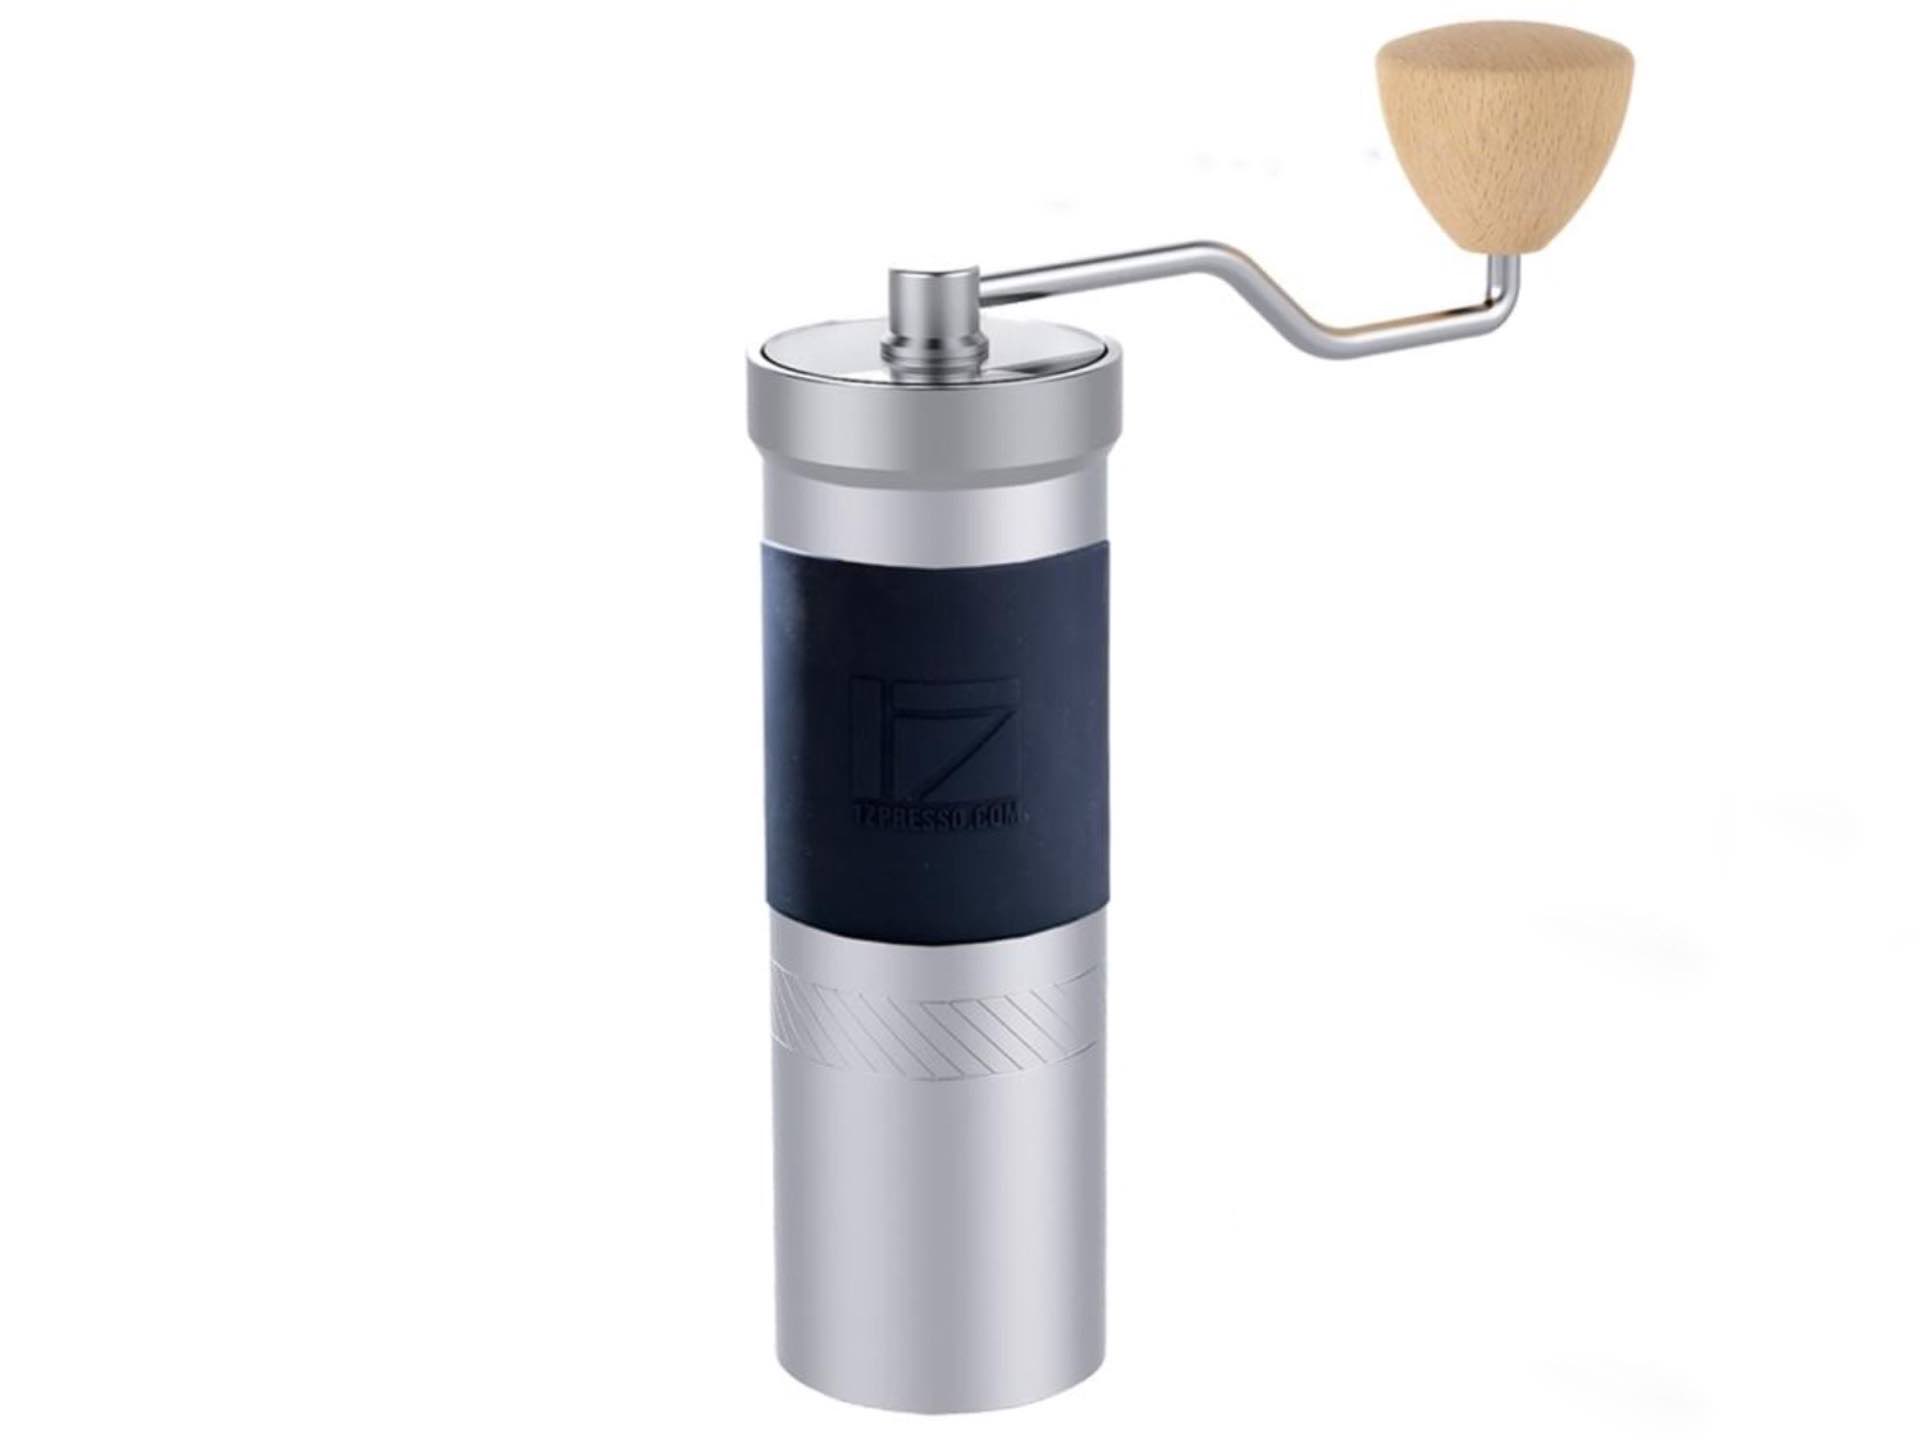 1Zpresso JX-Pro manual espresso grinder. ($159)